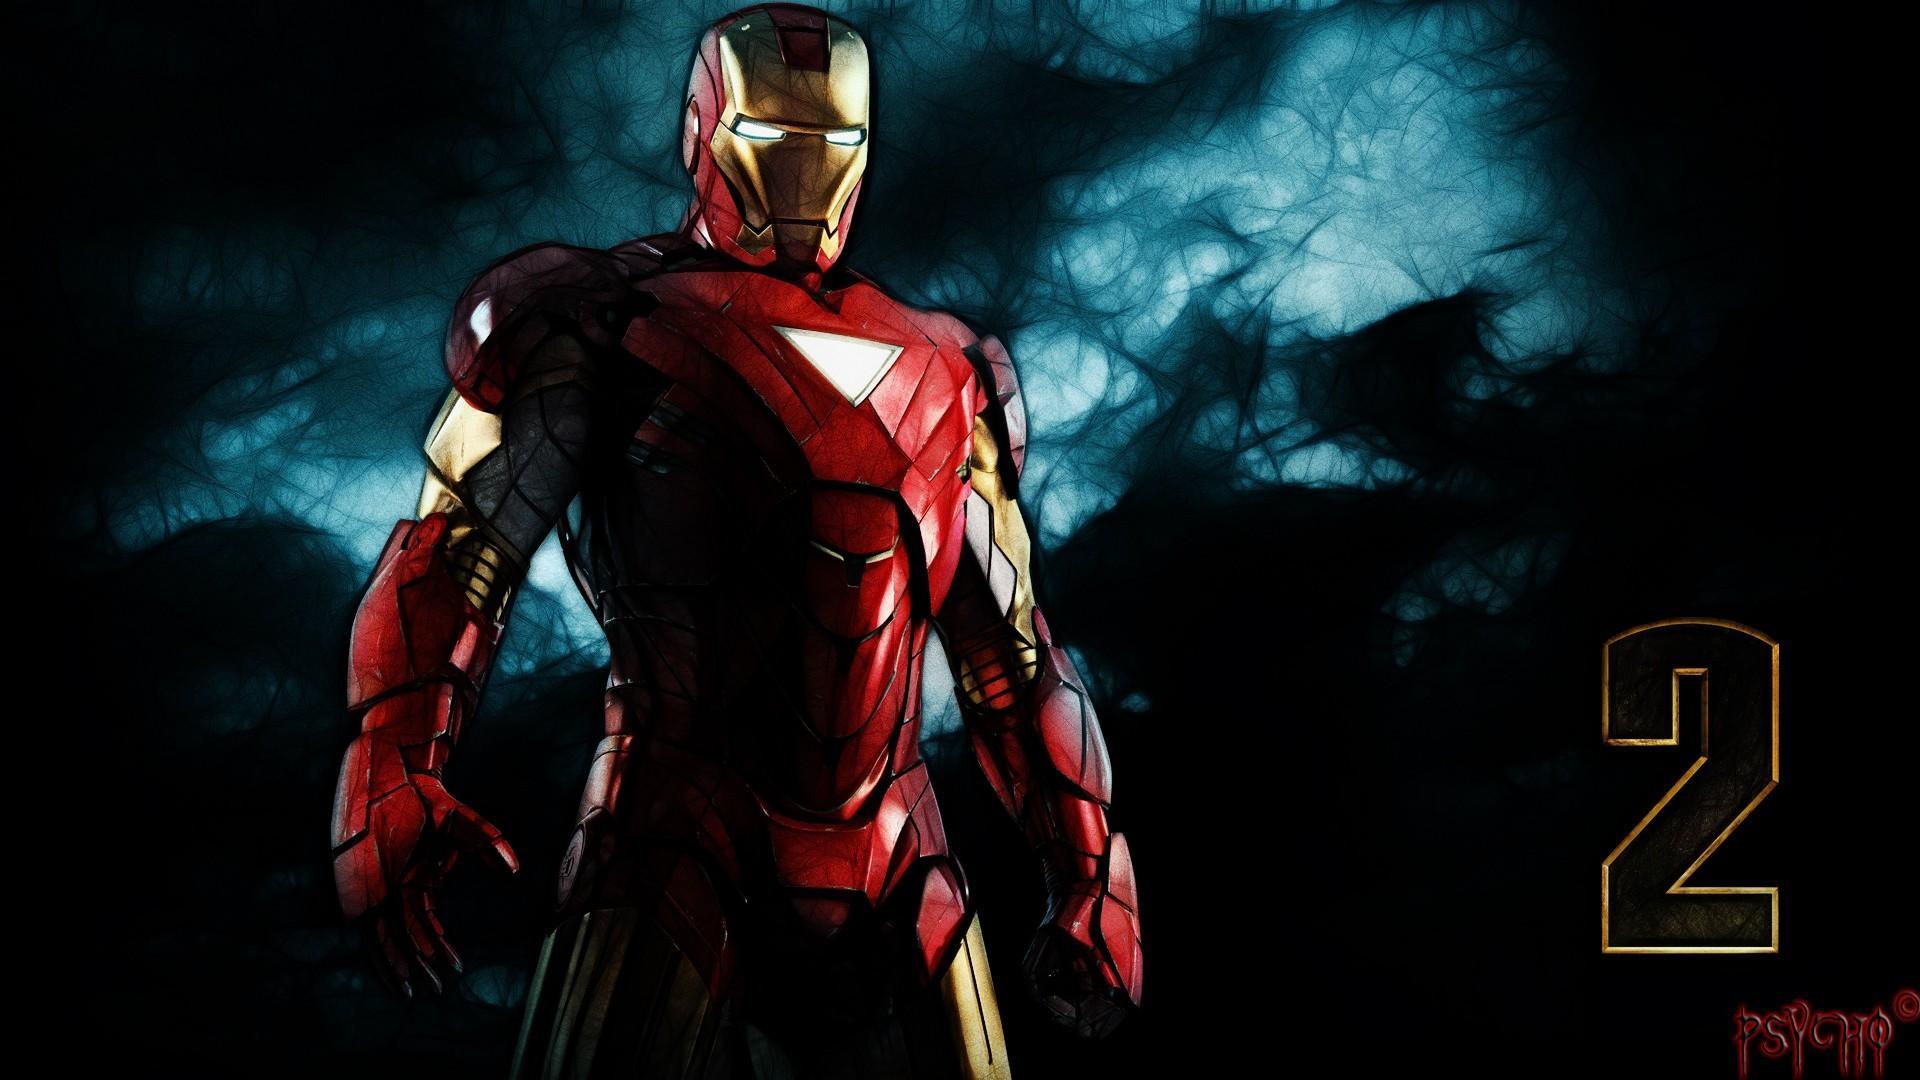 Iron Man - 3D Avenger Look | Tony Stark | Iron man avengers, Iron man art,  Marvel superhero posters